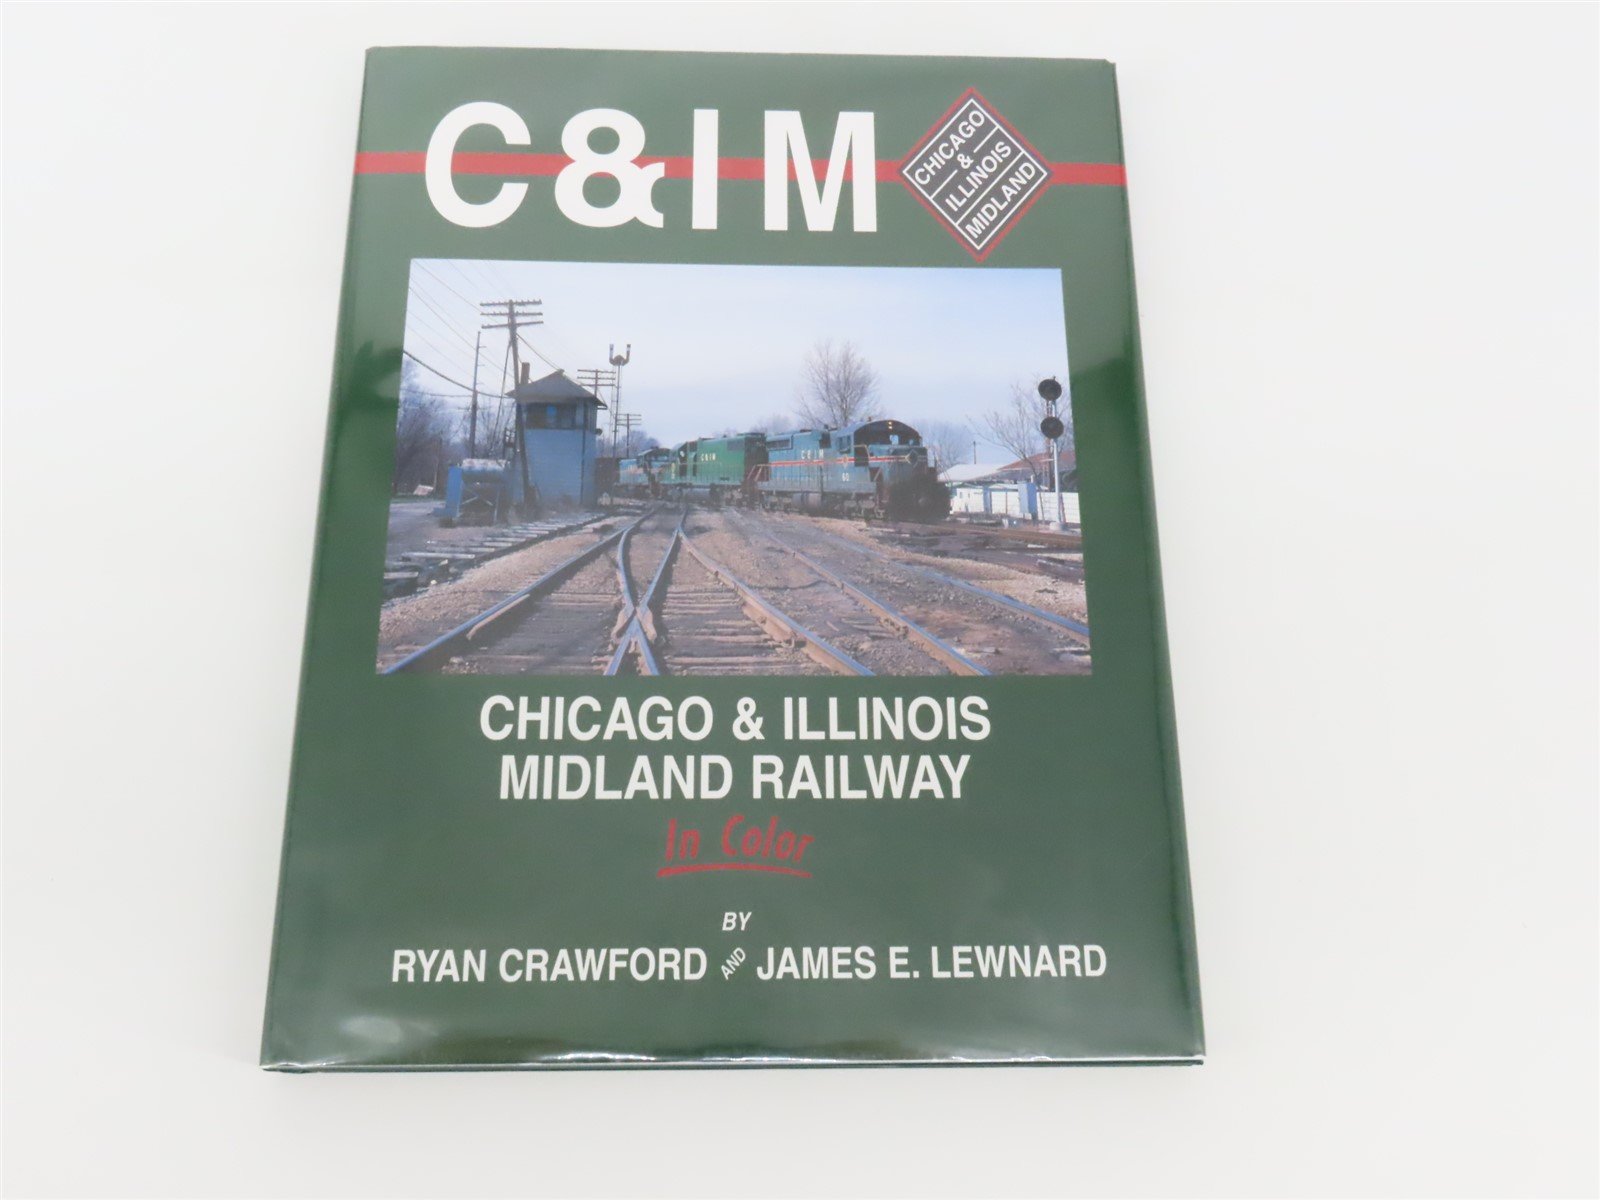 Morning Sun: C&IM Chicago & Illinois Midland Railway by Crawford & Lewnard ©2009